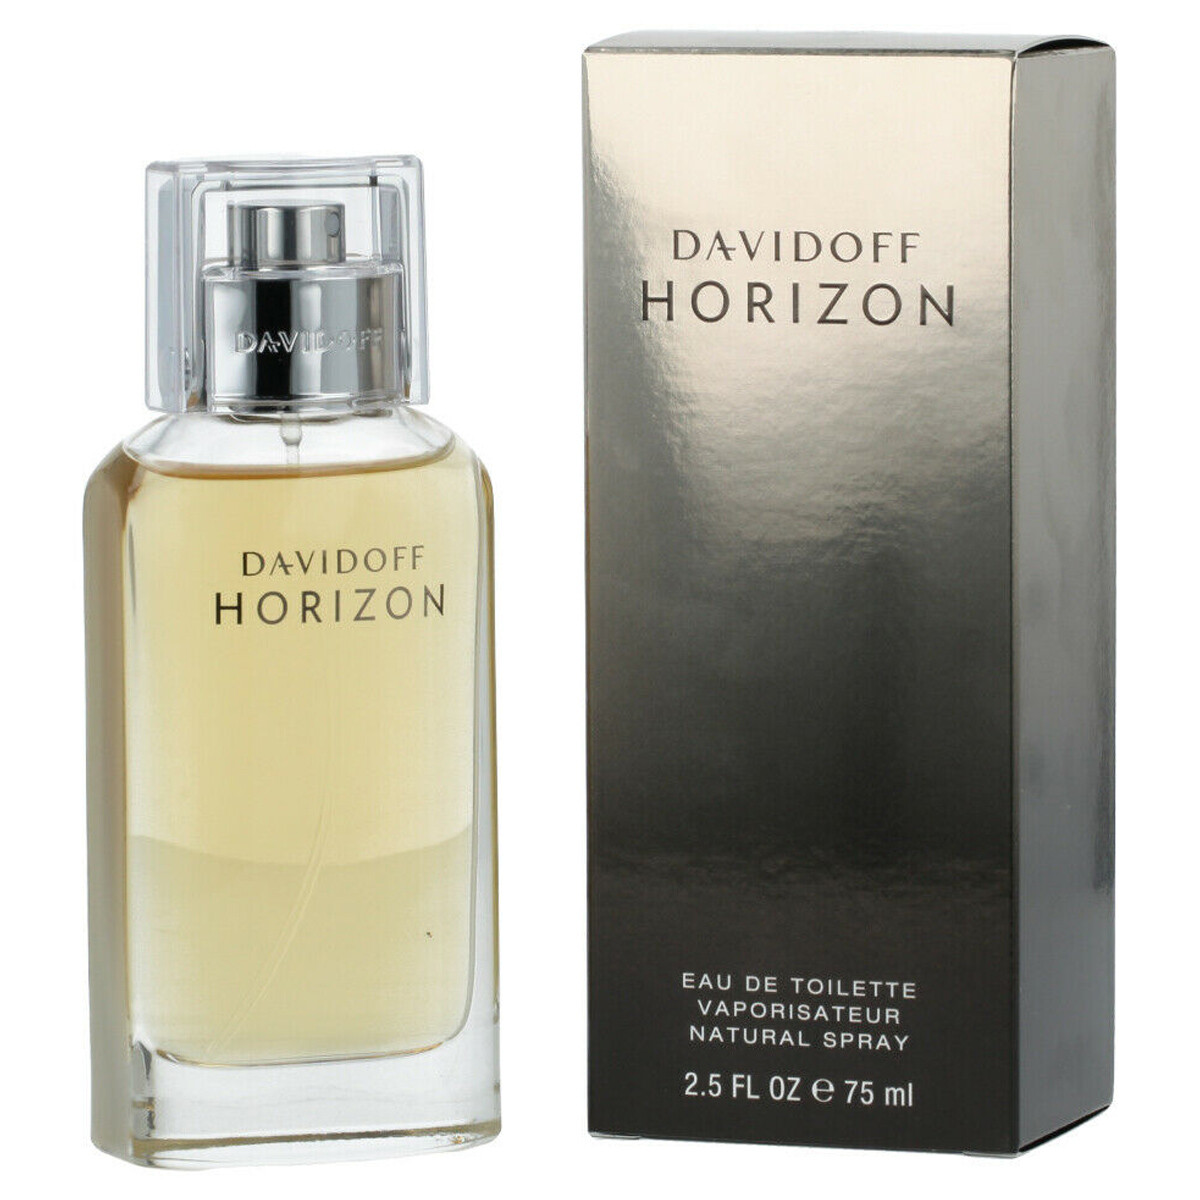 Perfume Davidoff Horizon 75ml Original 